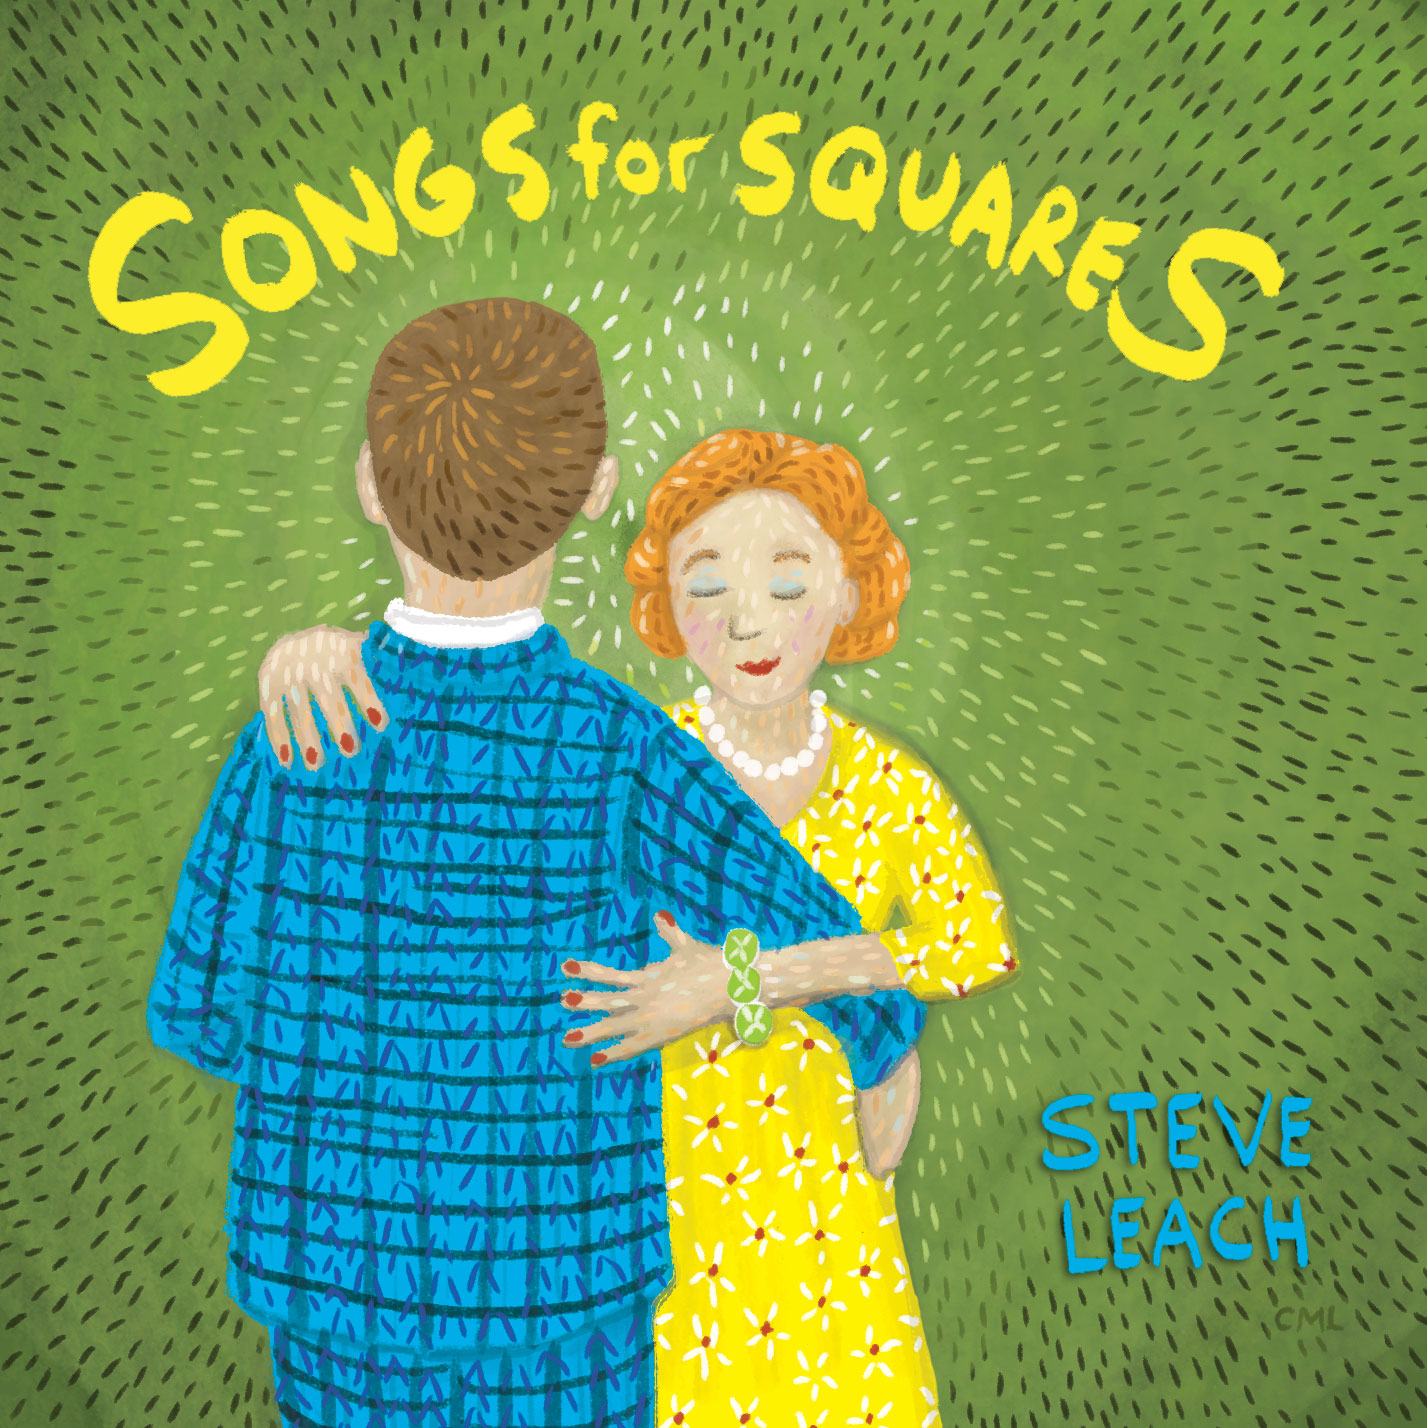 Christine Marie Larsen Illustration: CD Cover Illustration of a couple dancing. Songs for Squares, Steve Leach